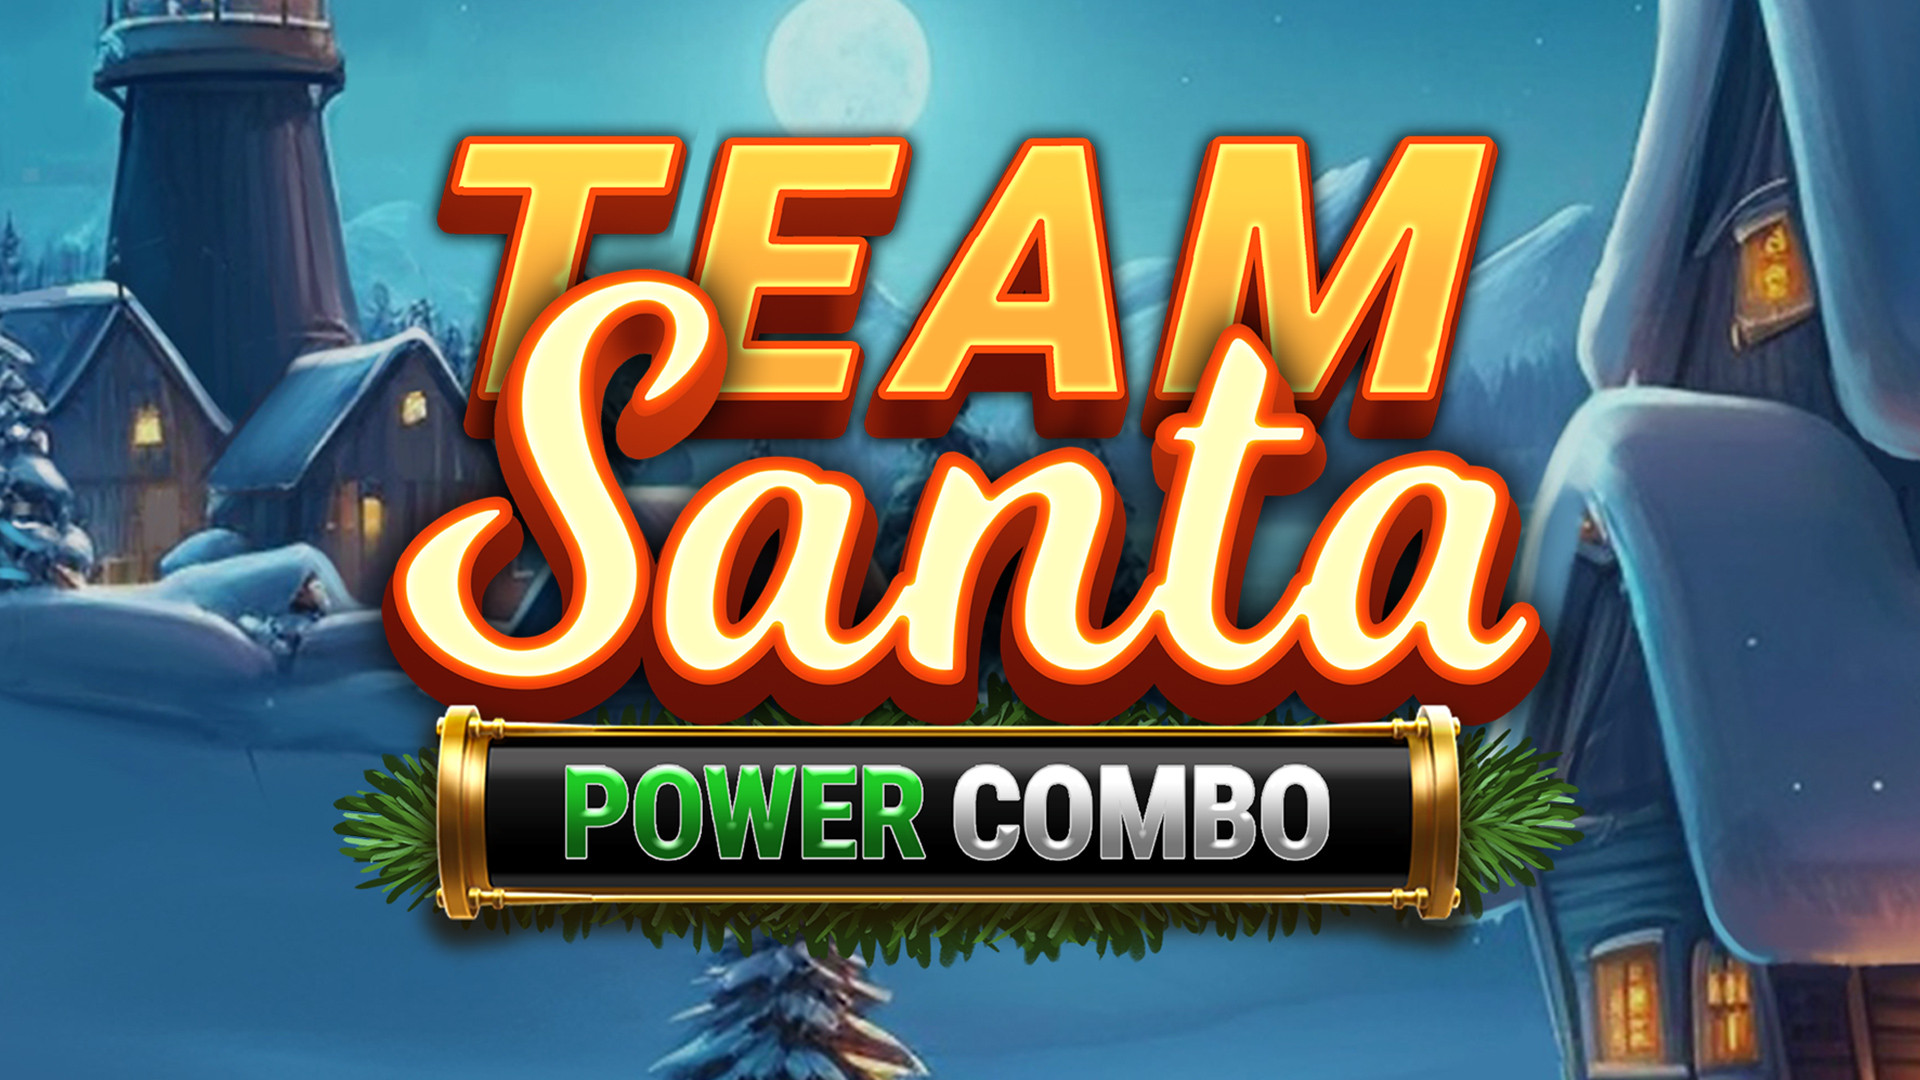 Team Santa Power Combo